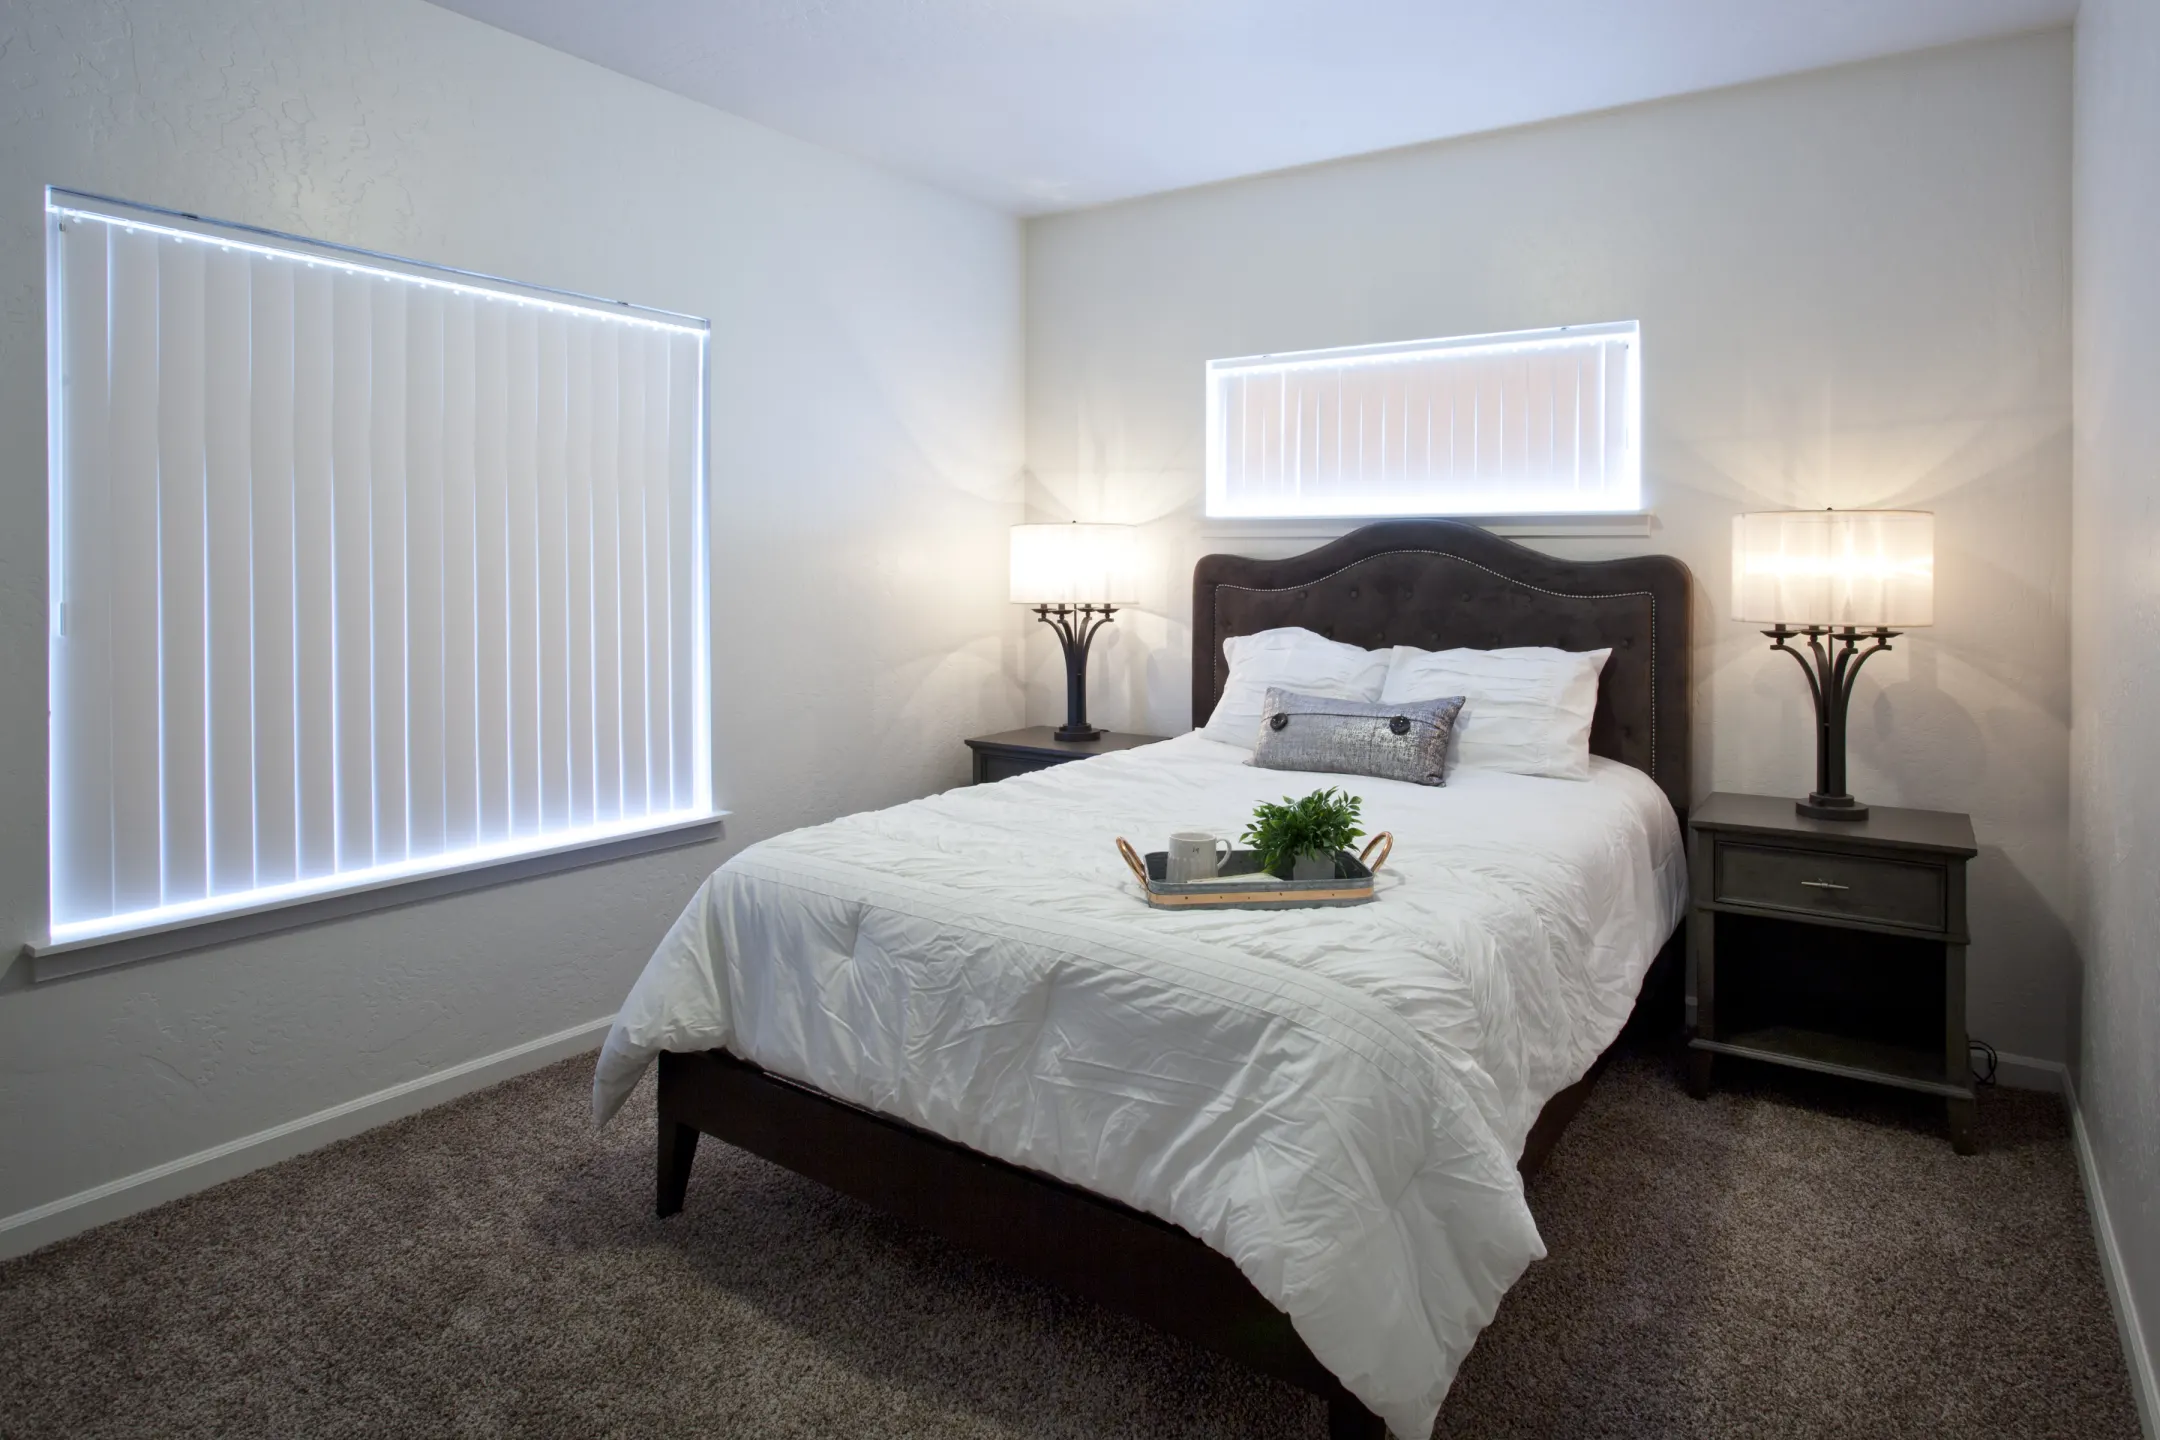 Bedroom - Legacy Villas Apartments - Liberty Lake, WA